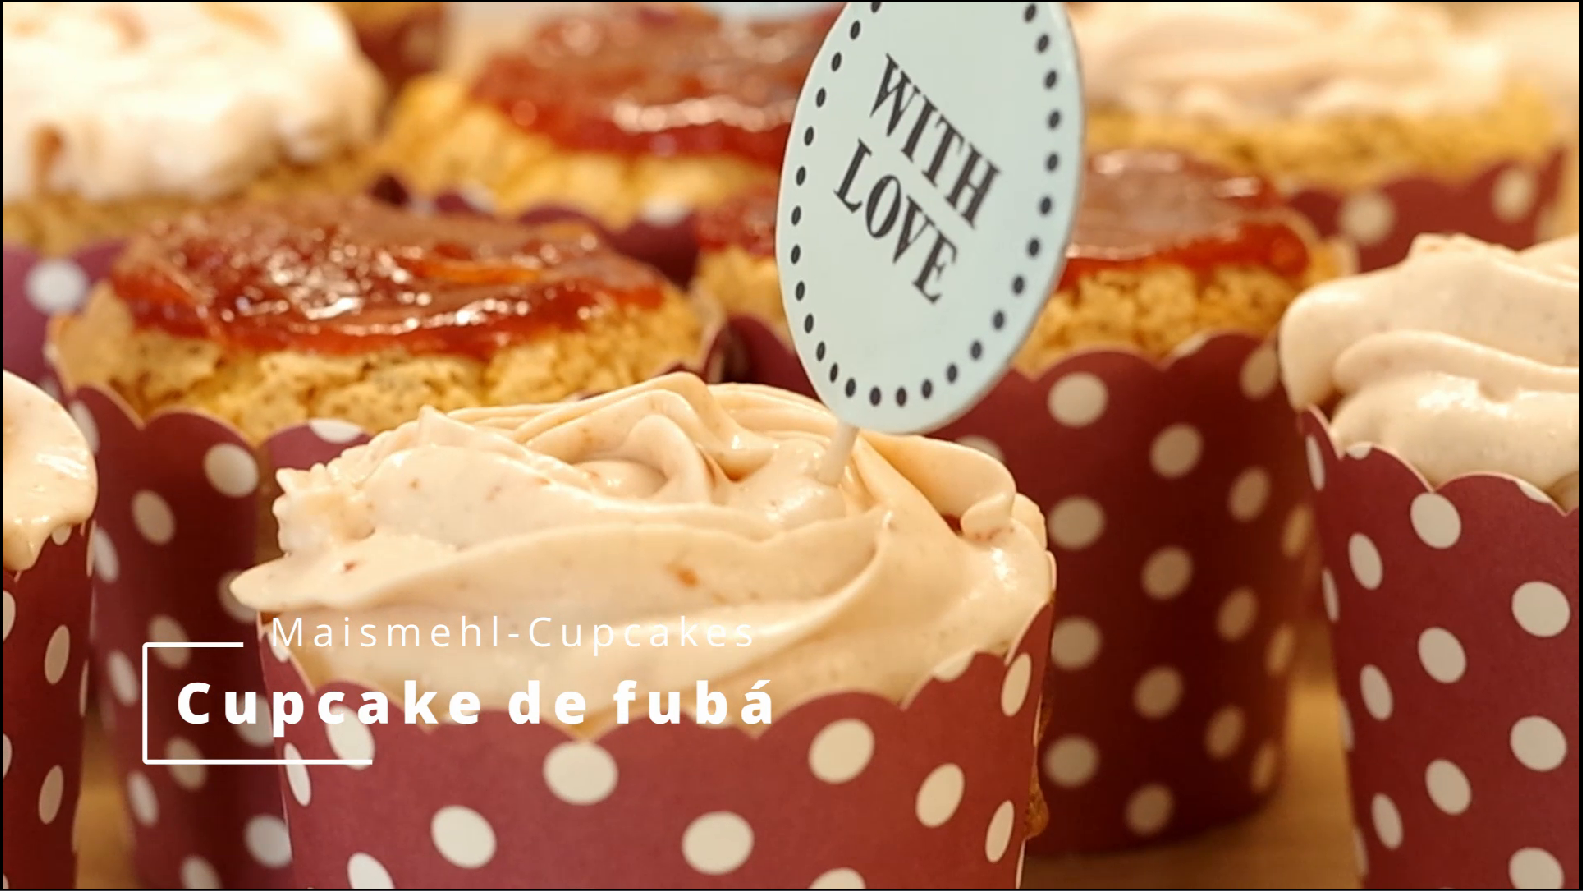 Video: Maismehl Cupcakes | Cupcake de Fubá by "Coraticum"